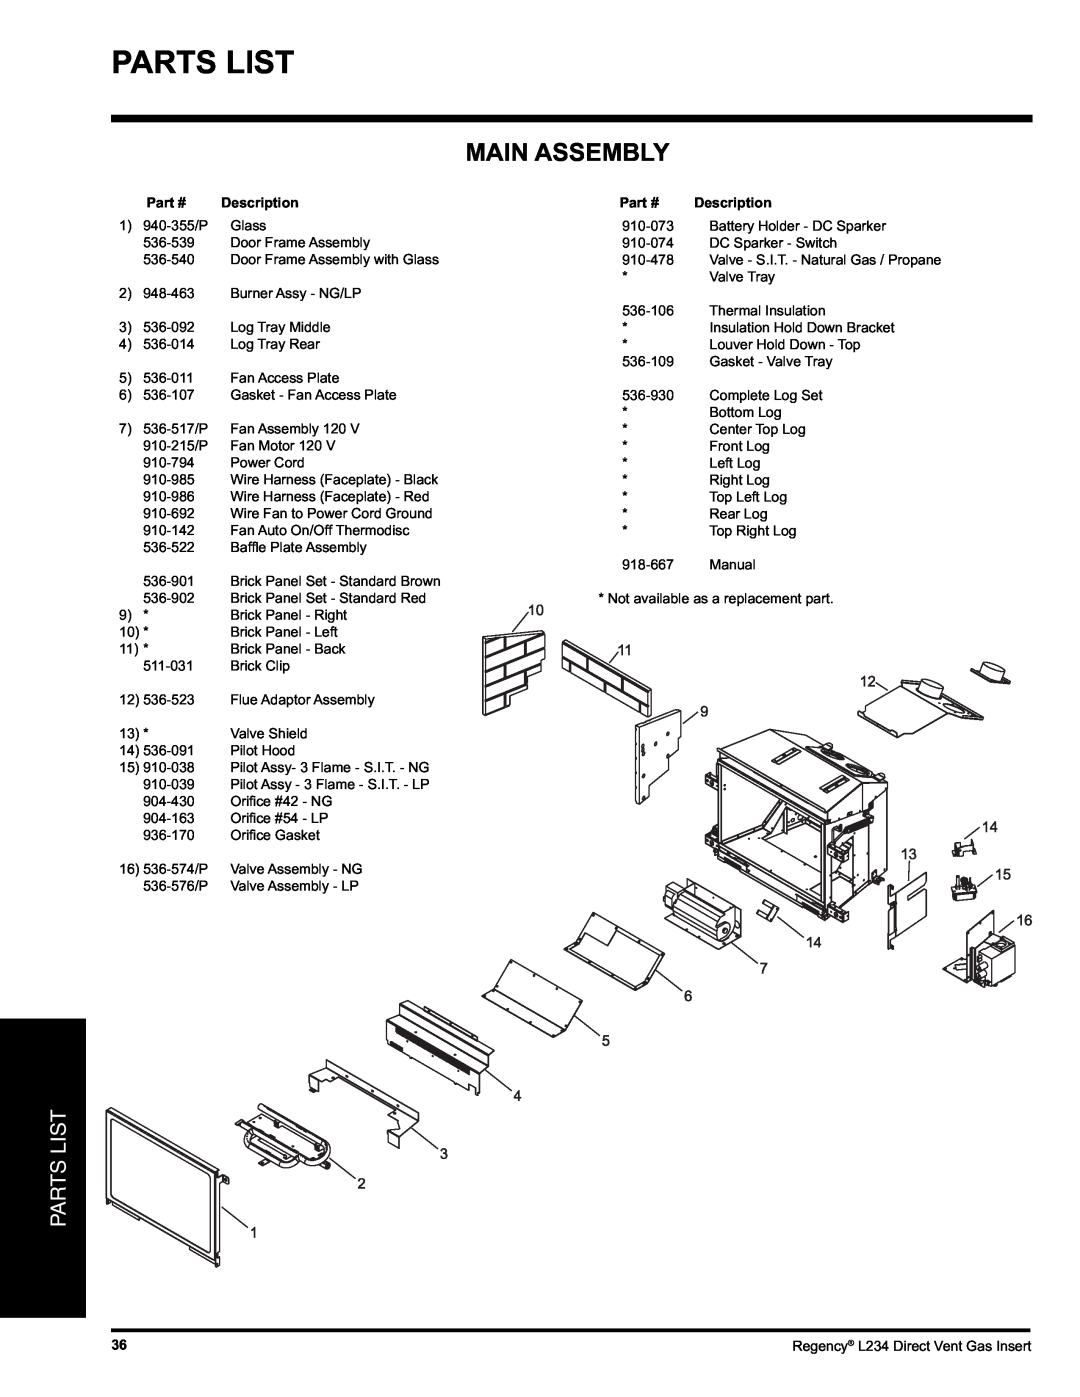 Regency L234-LP, L234-NG installation manual Parts List, Main Assembly, Description 